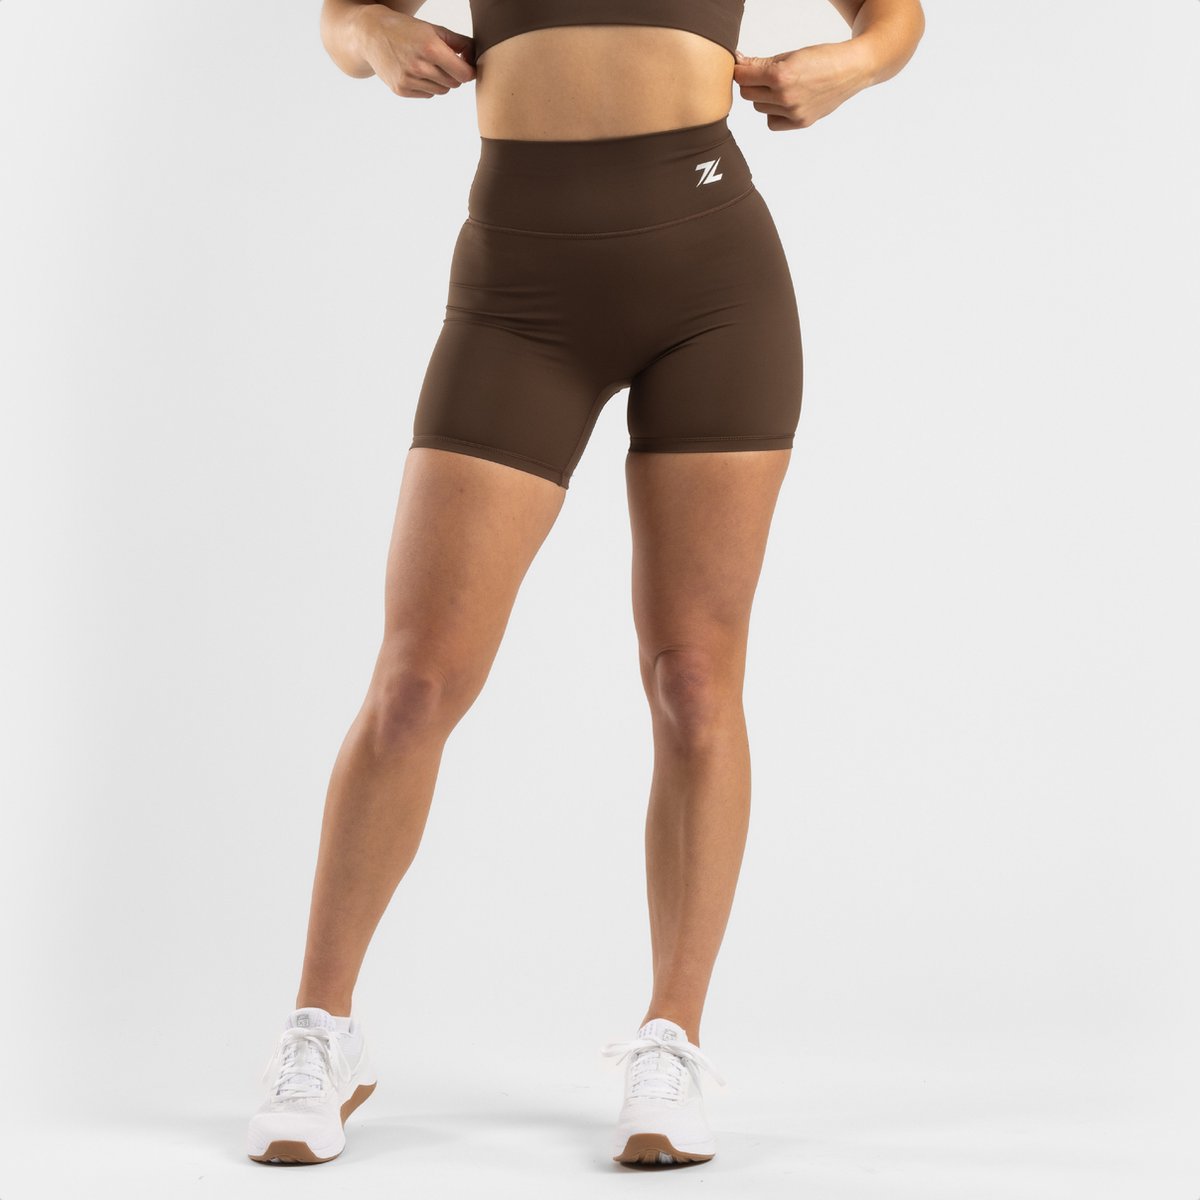 ZEUZ Korte Sport Legging Dames High Waist - Sportkleding & Sportlegging Squat Proof - Fitness & Crossfit - Hardloopbroek, Yoga Broek - 62% Recycled Nylon & 38% Elastaan - Bruin - Maat M